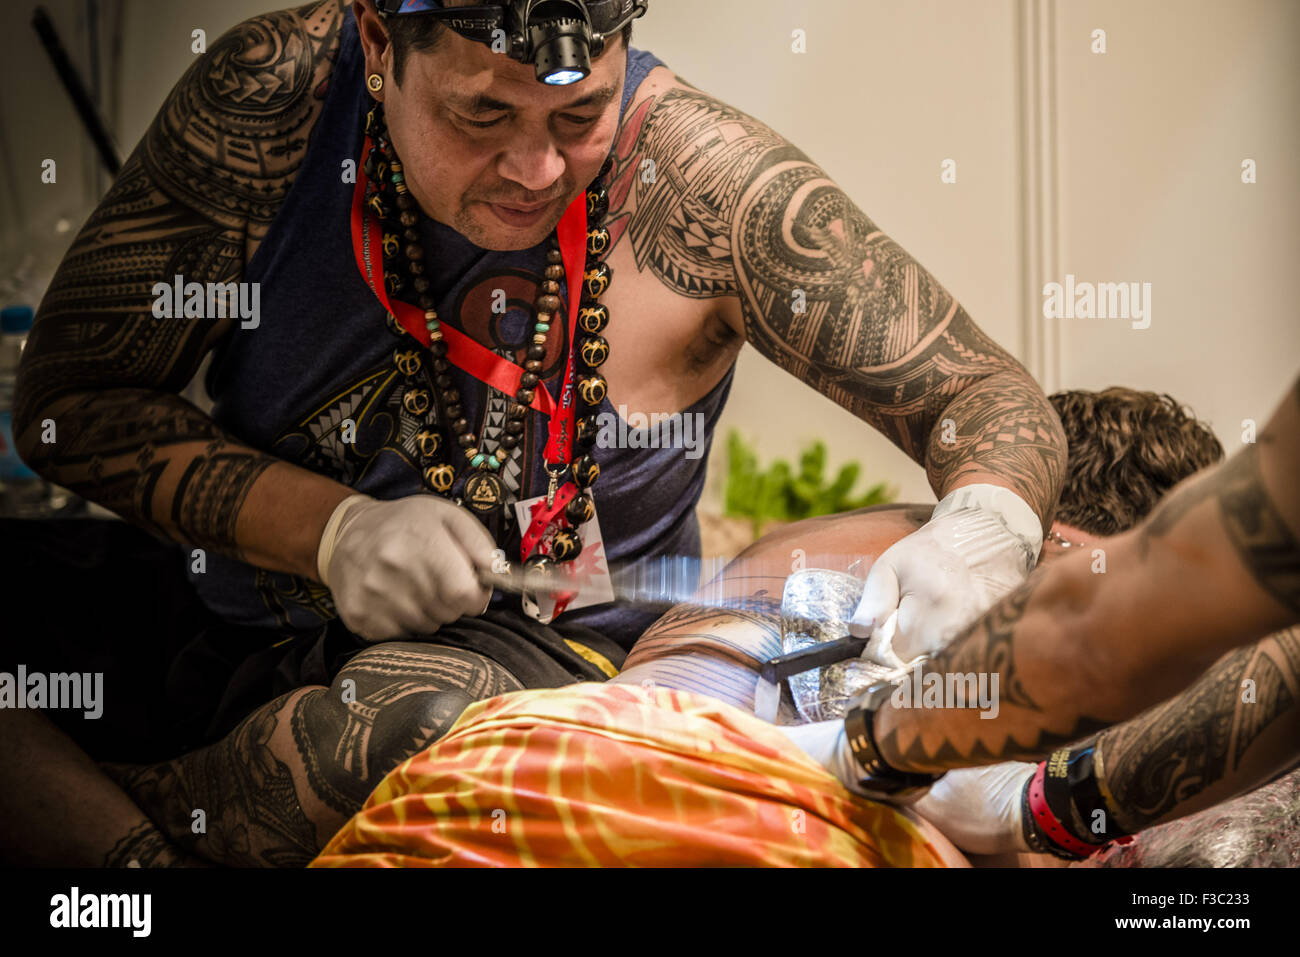 Samoan Tattoos - Much More Than A Fashion Statement. | FeedsFloor